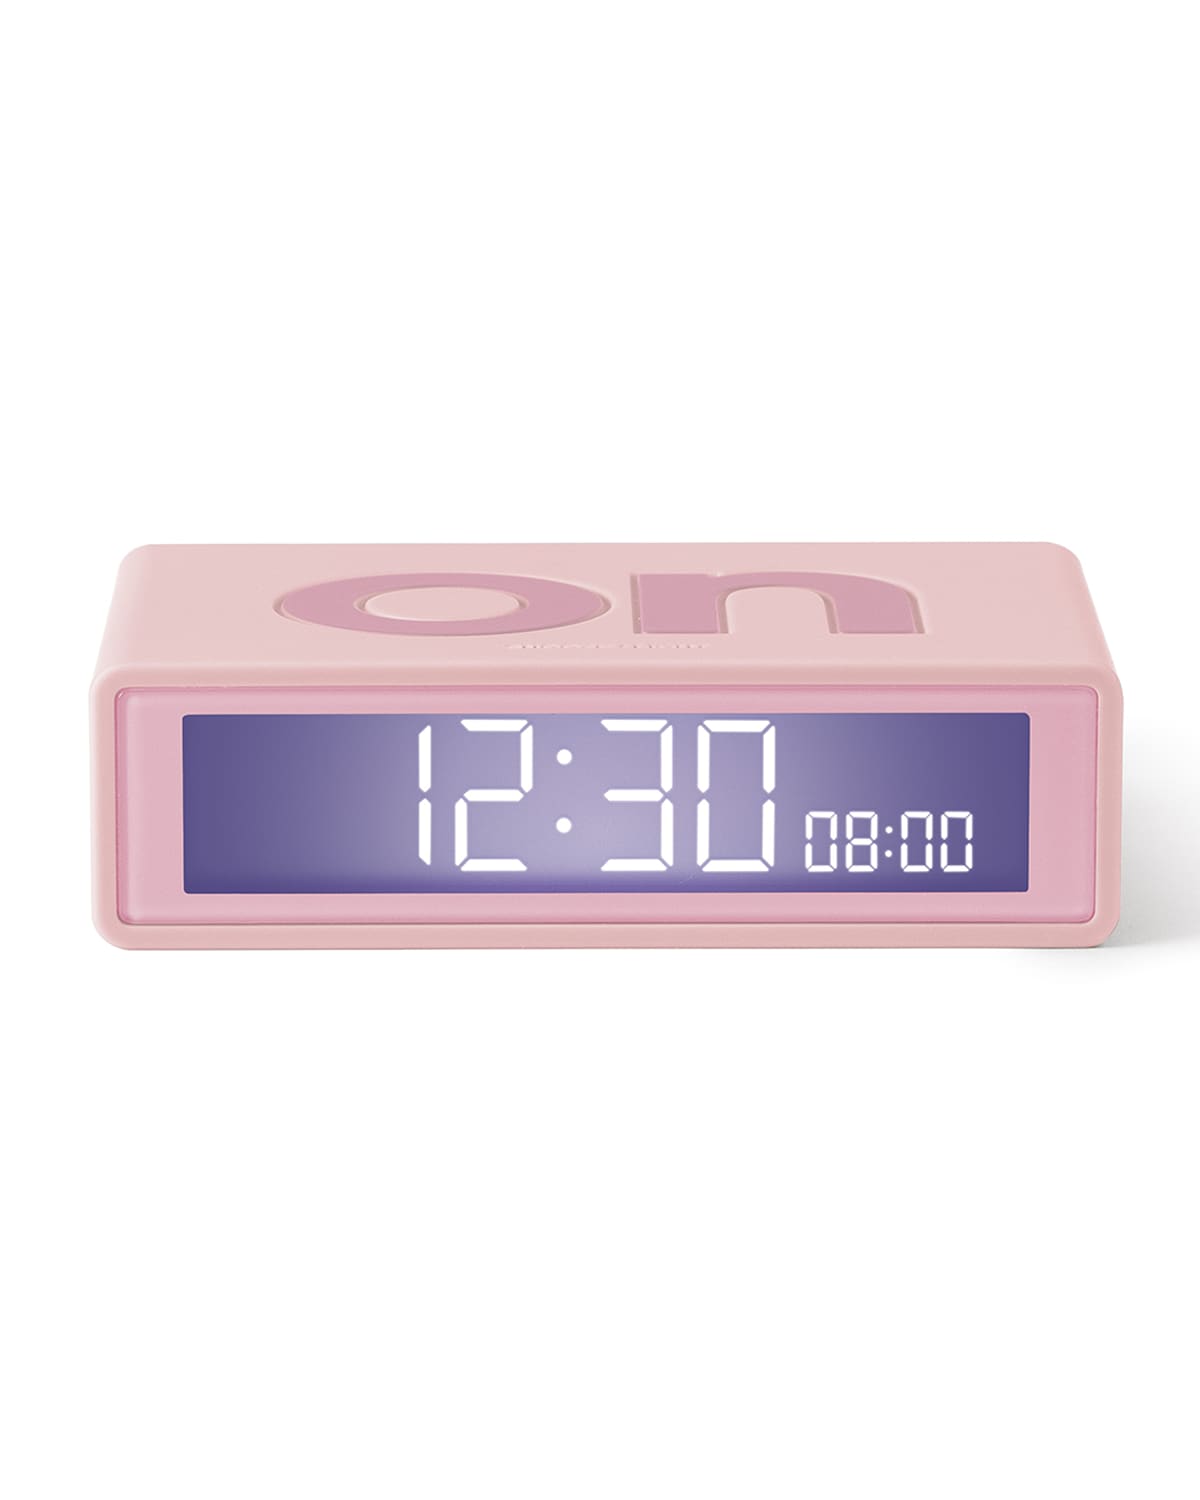 Lexon Design Flip+ Travel Clock - Reversible LCD Alarm Clock